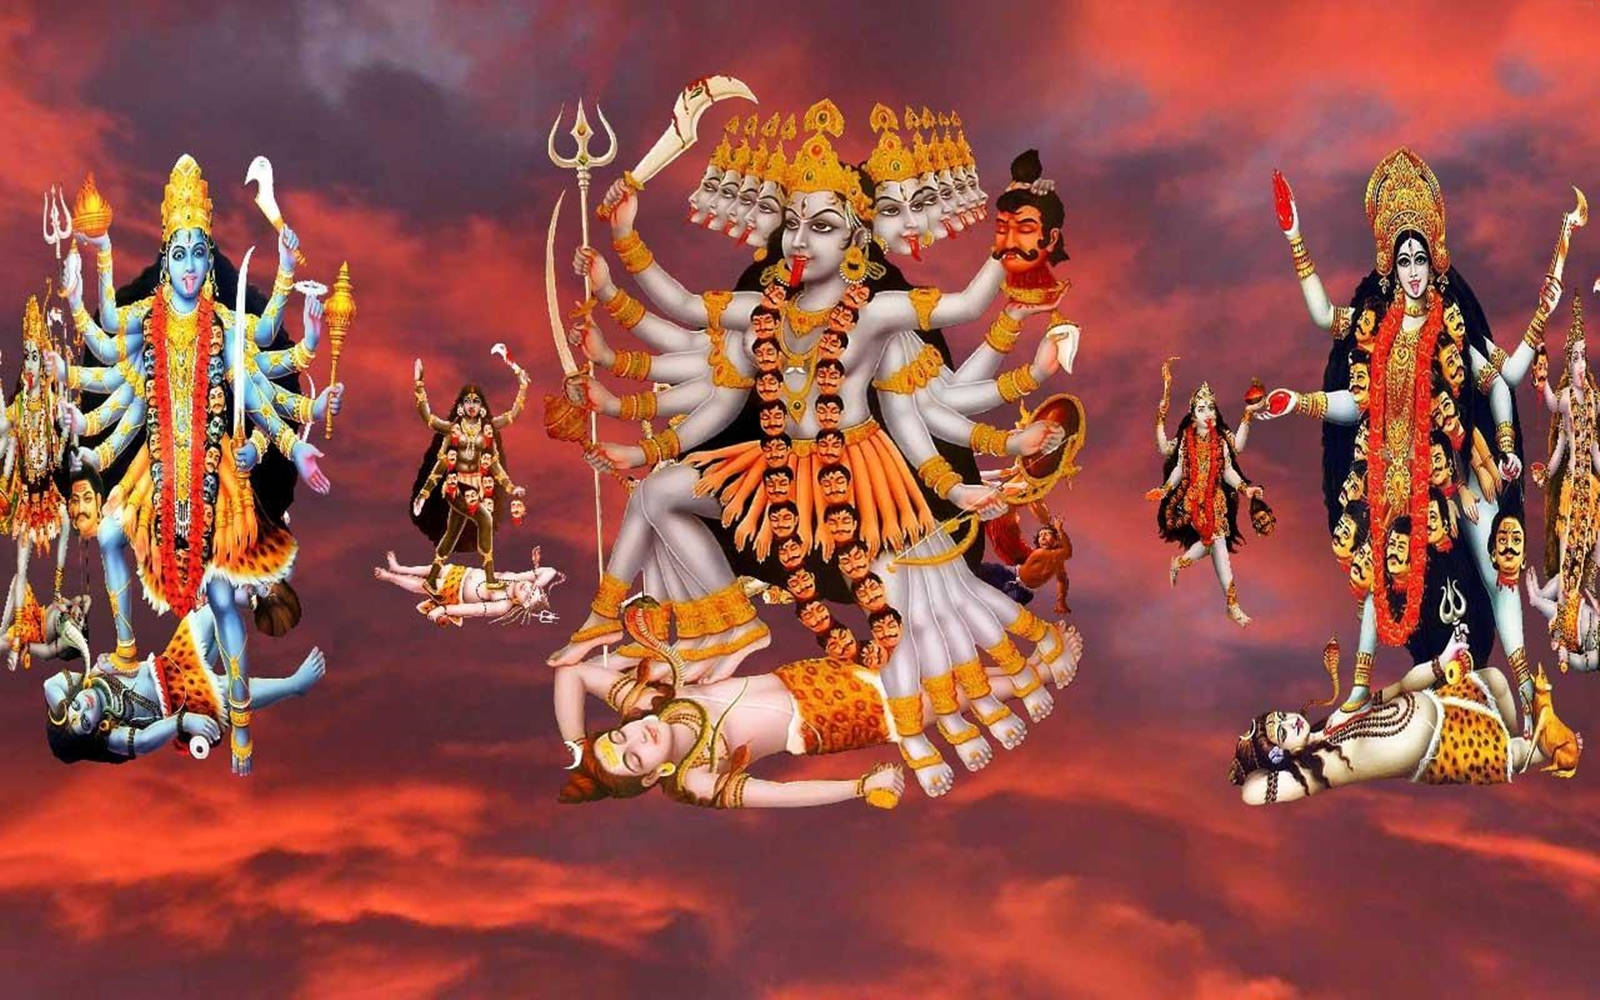 Maa Kali On Shiva Paintings On Red Sky Wallpaper